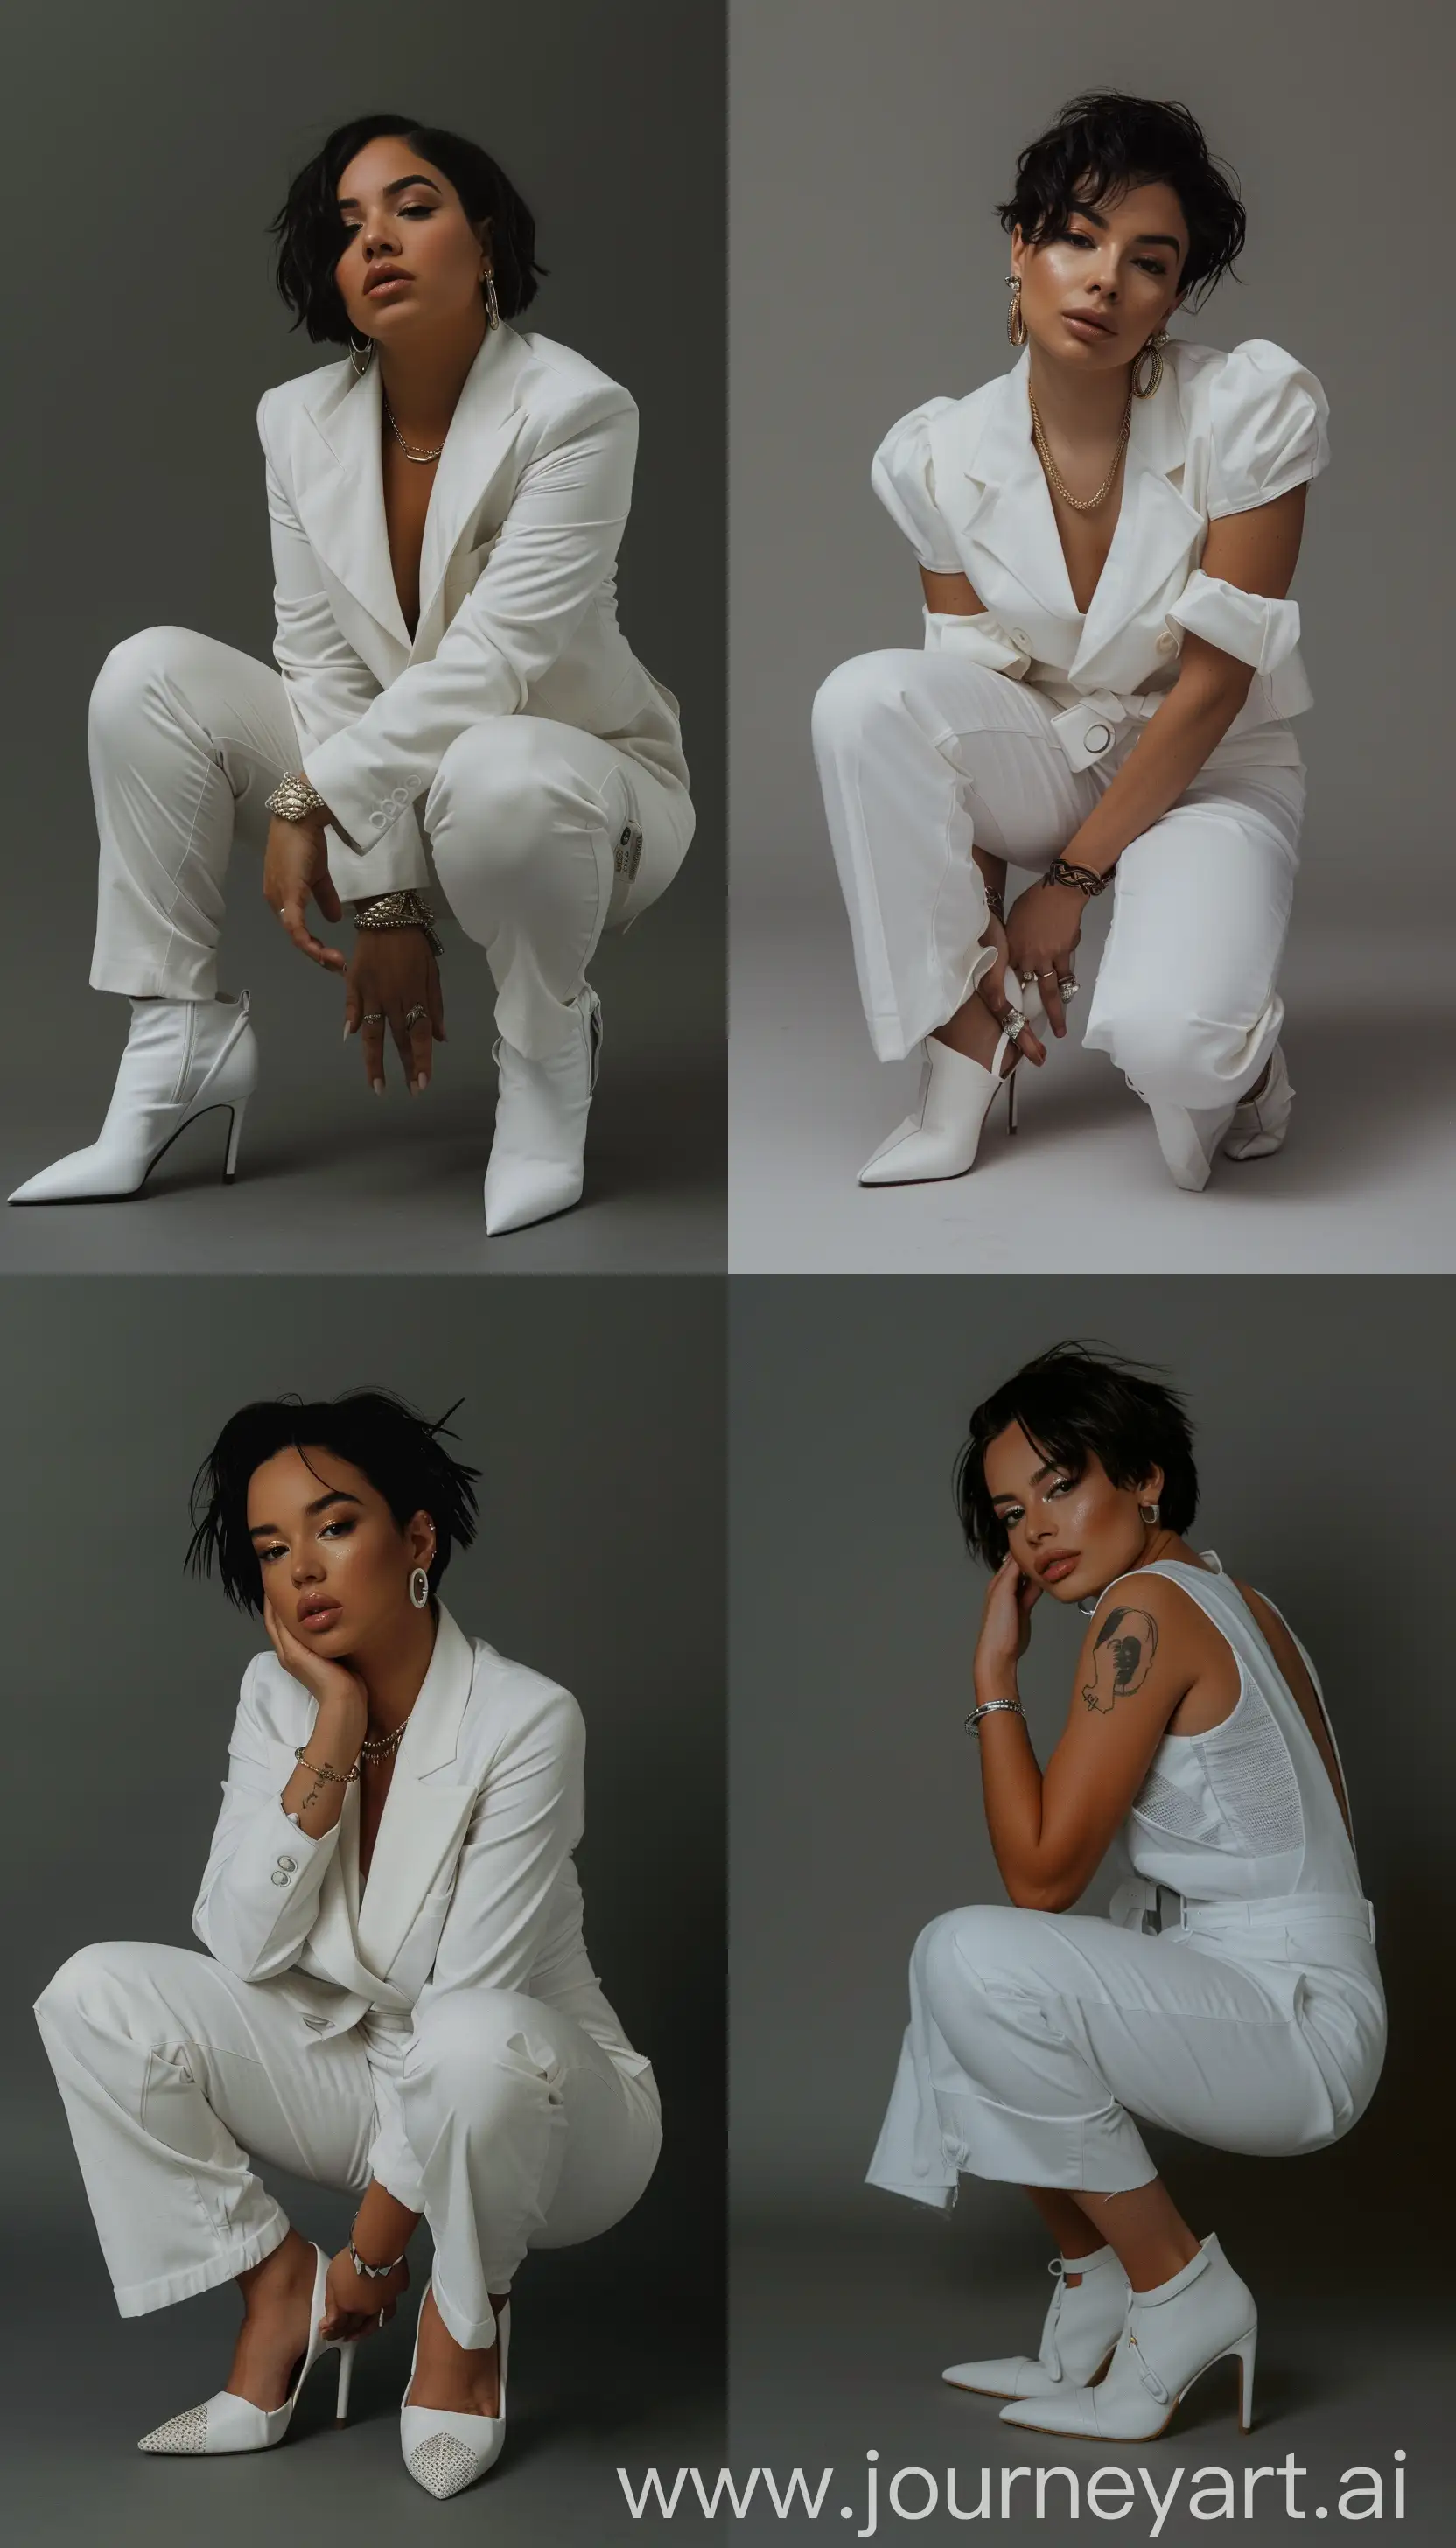 Elegant-Woman-in-White-Poses-Gracefully-for-Studio-Photo